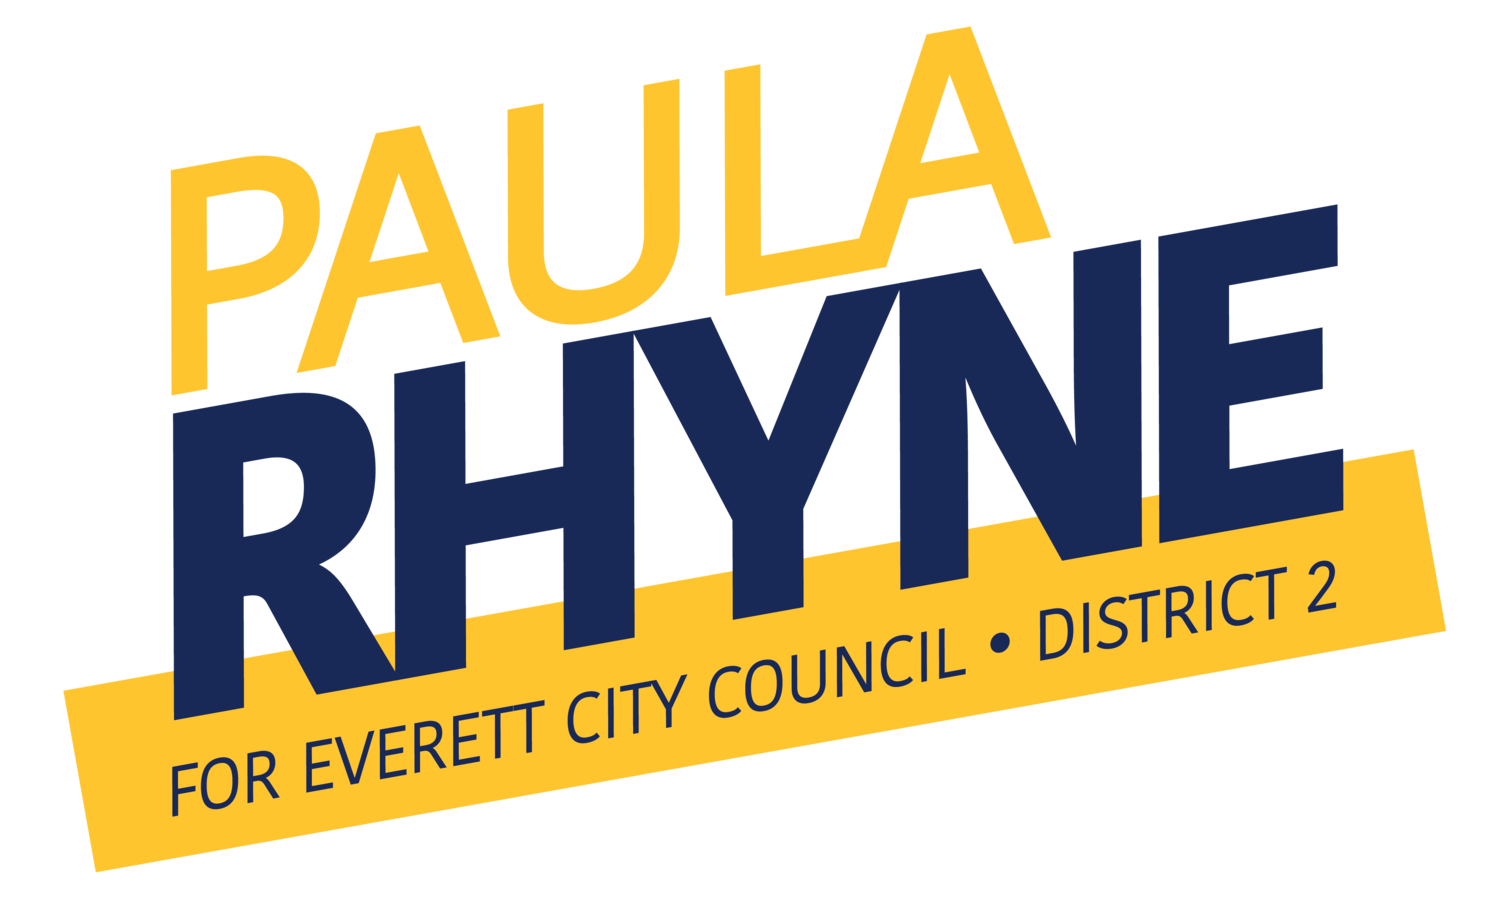 Paula Rhyne, Everett City Council, District 2 Candidate